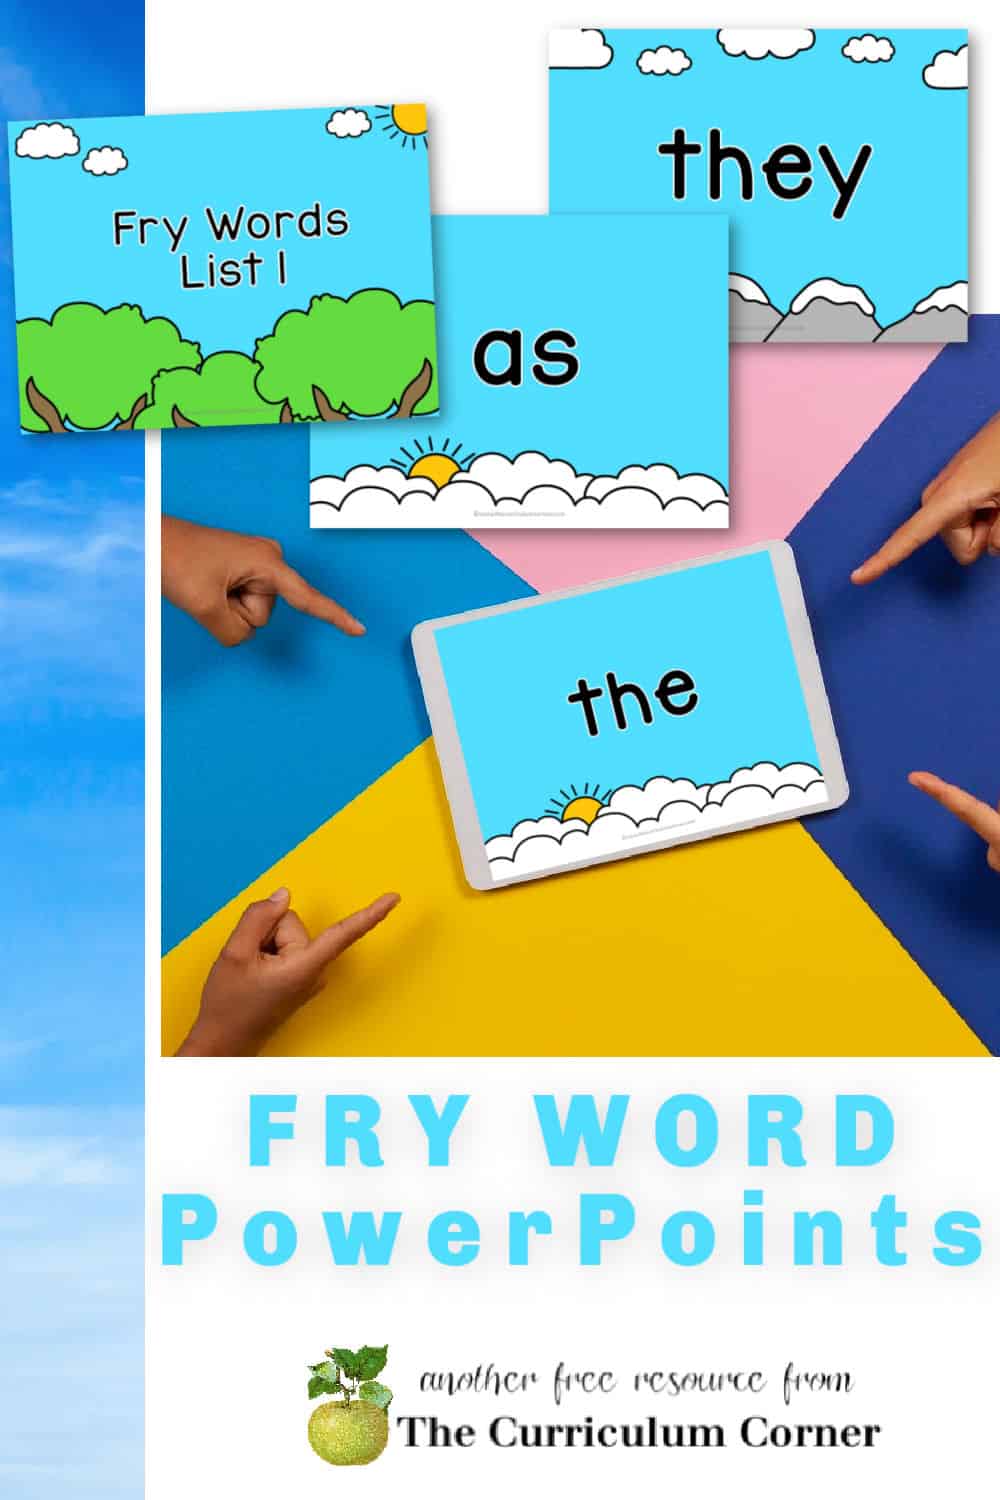 fry-word-powerpoint-the-curriculum-corner-123